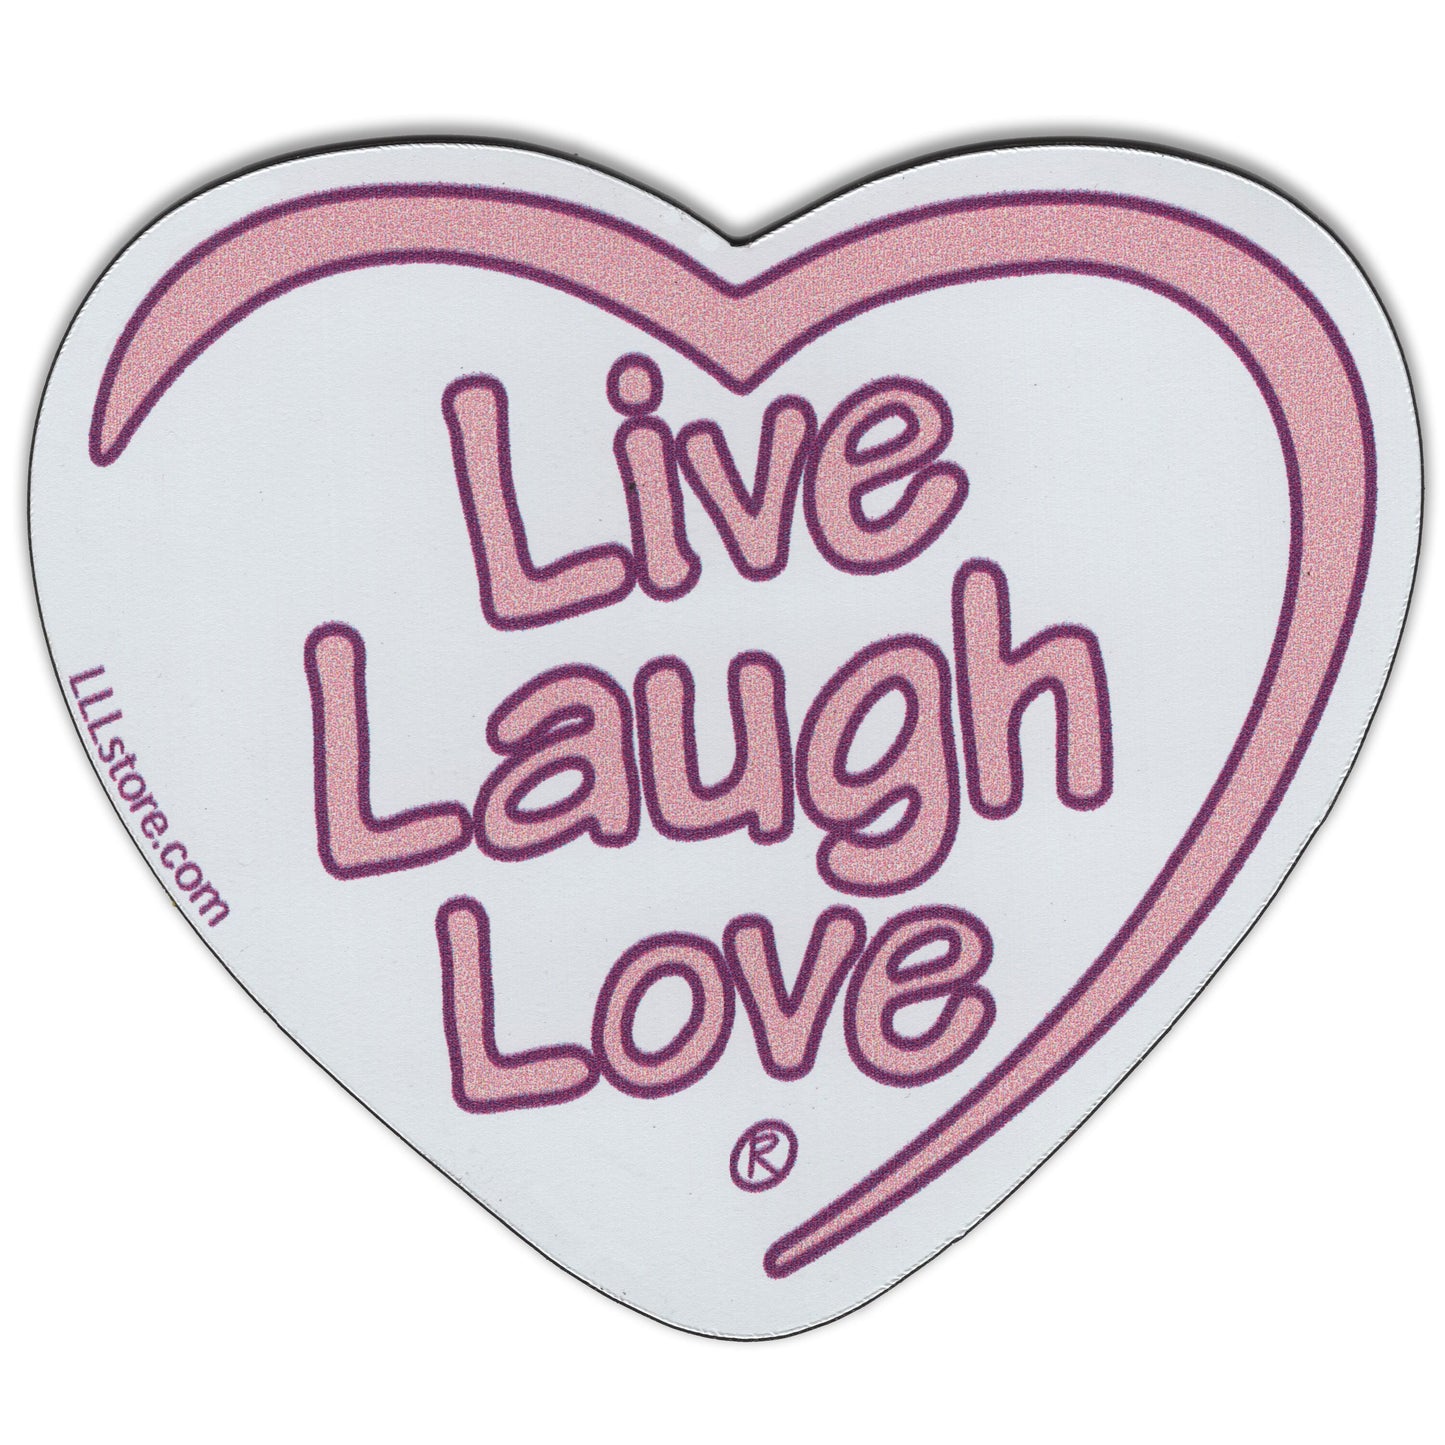 Live Laugh Love® Decorative Heart Shape Message Magnet - Pink on White